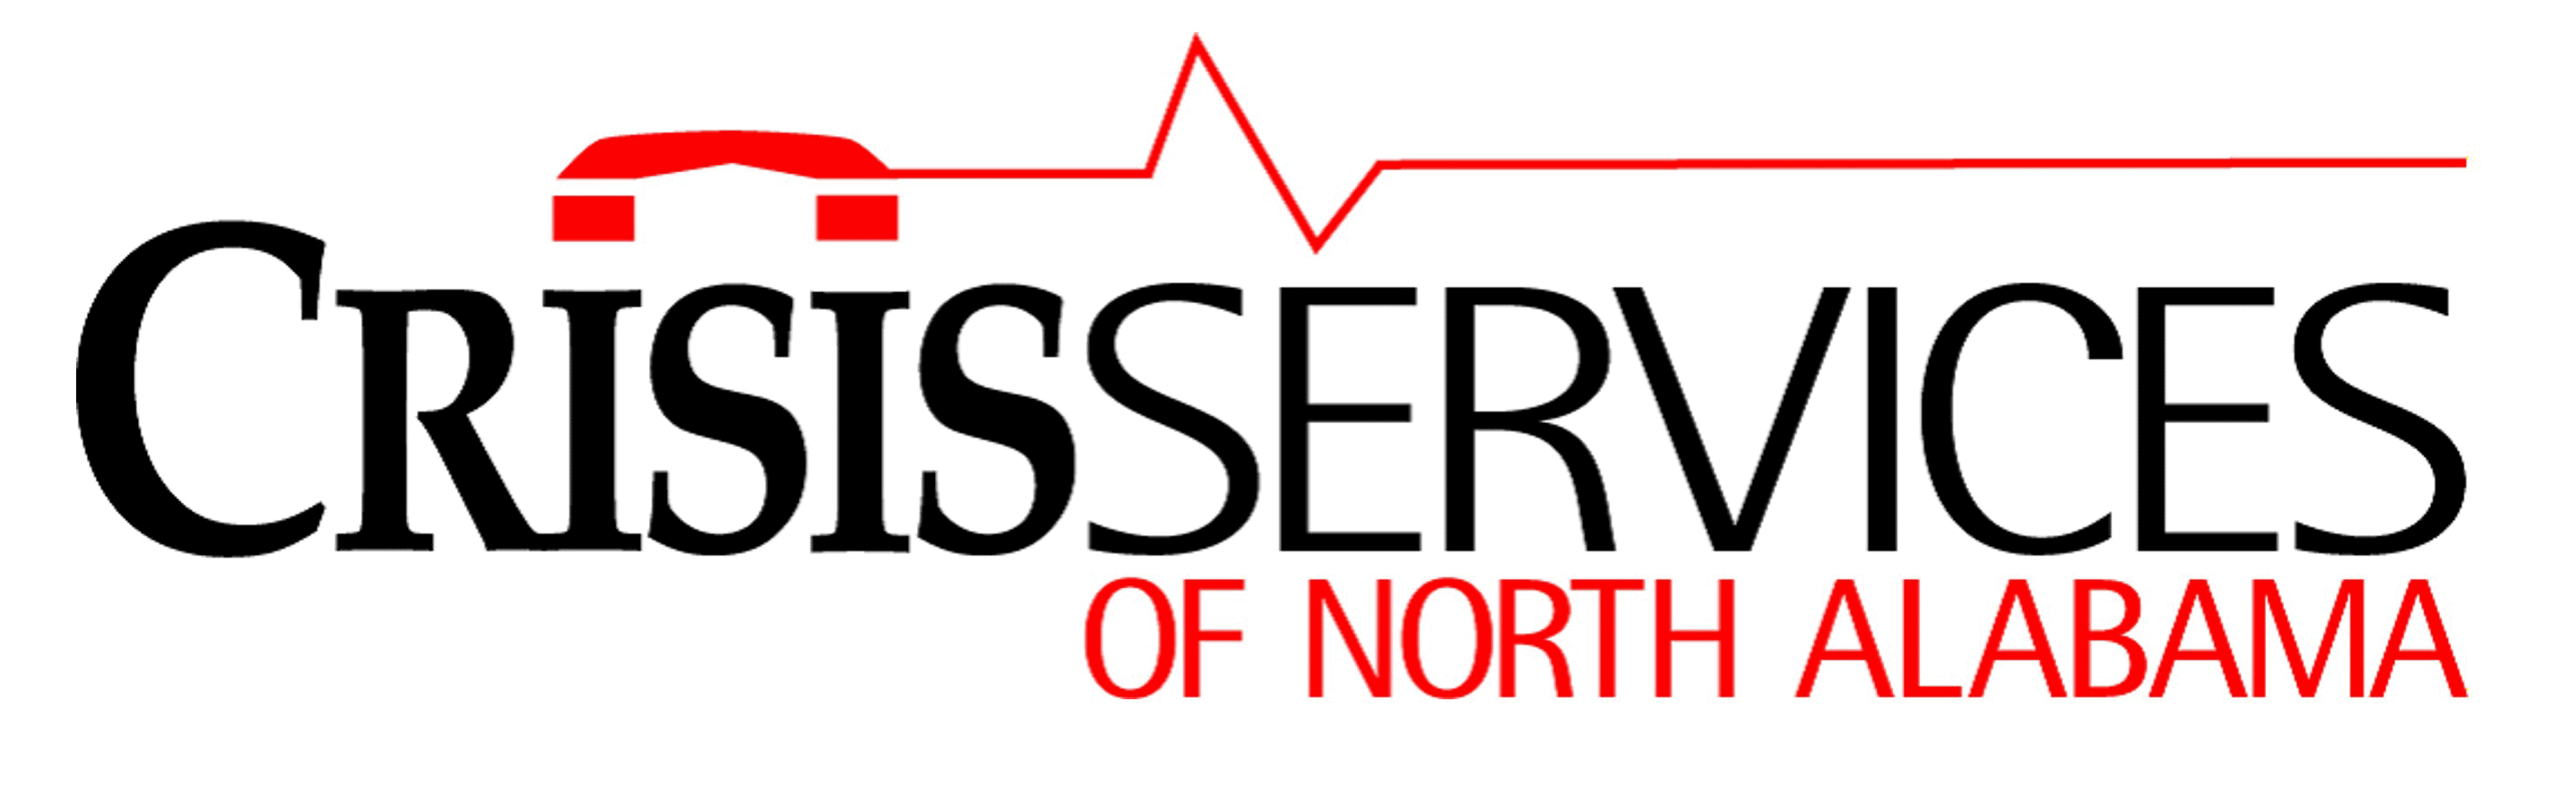 Crisis Services of North Alabama logo